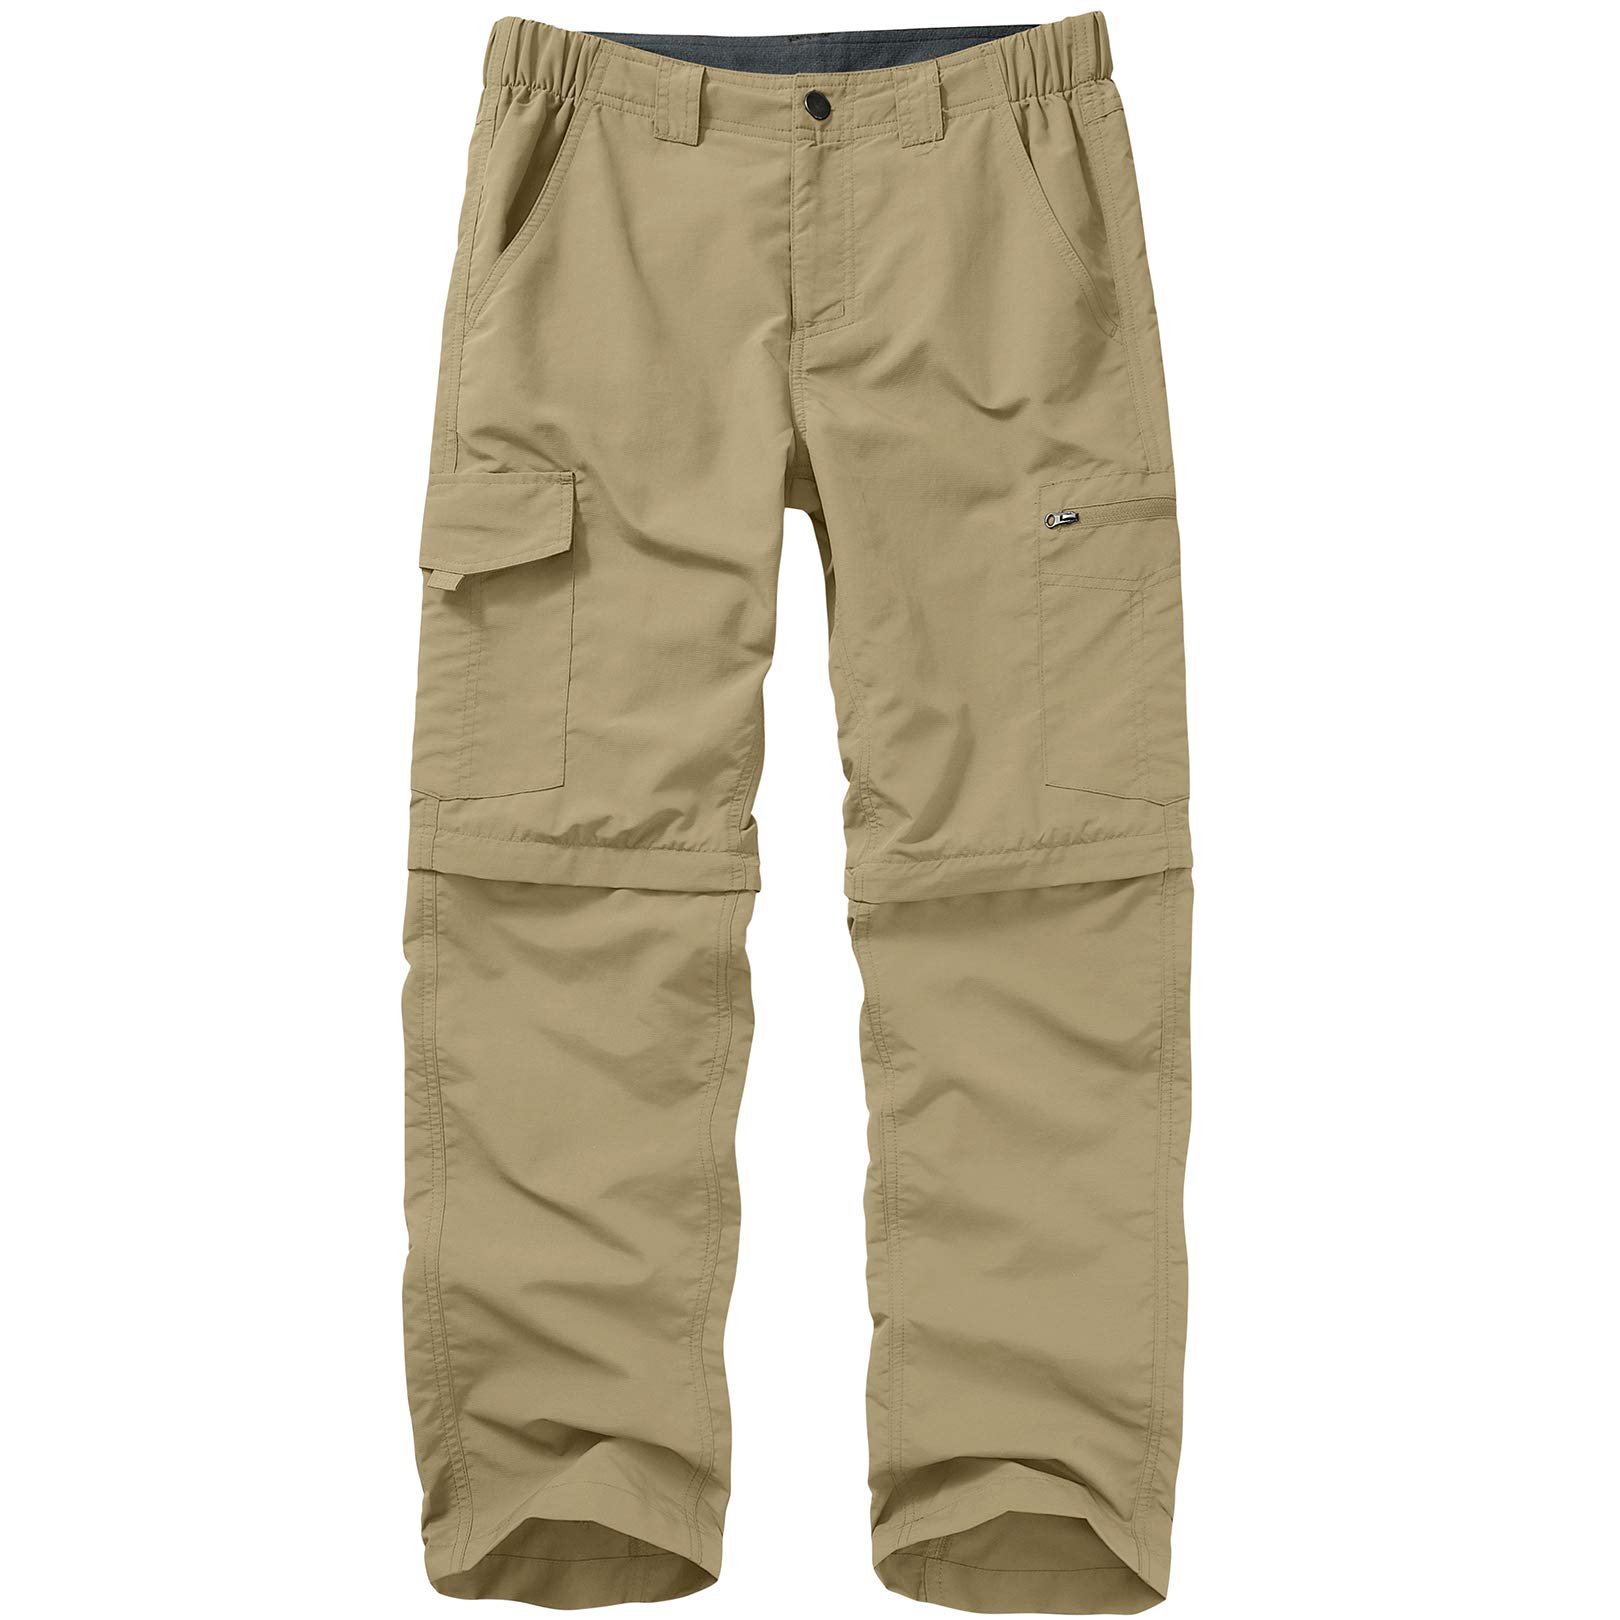 NOUKOW Men's Outdoor Hiking Pants, Quick Dry Lightweight Tactical Pants,  Water Resistant Stretch Fishing Pants with 6 Zip Pockets & Belt Beige